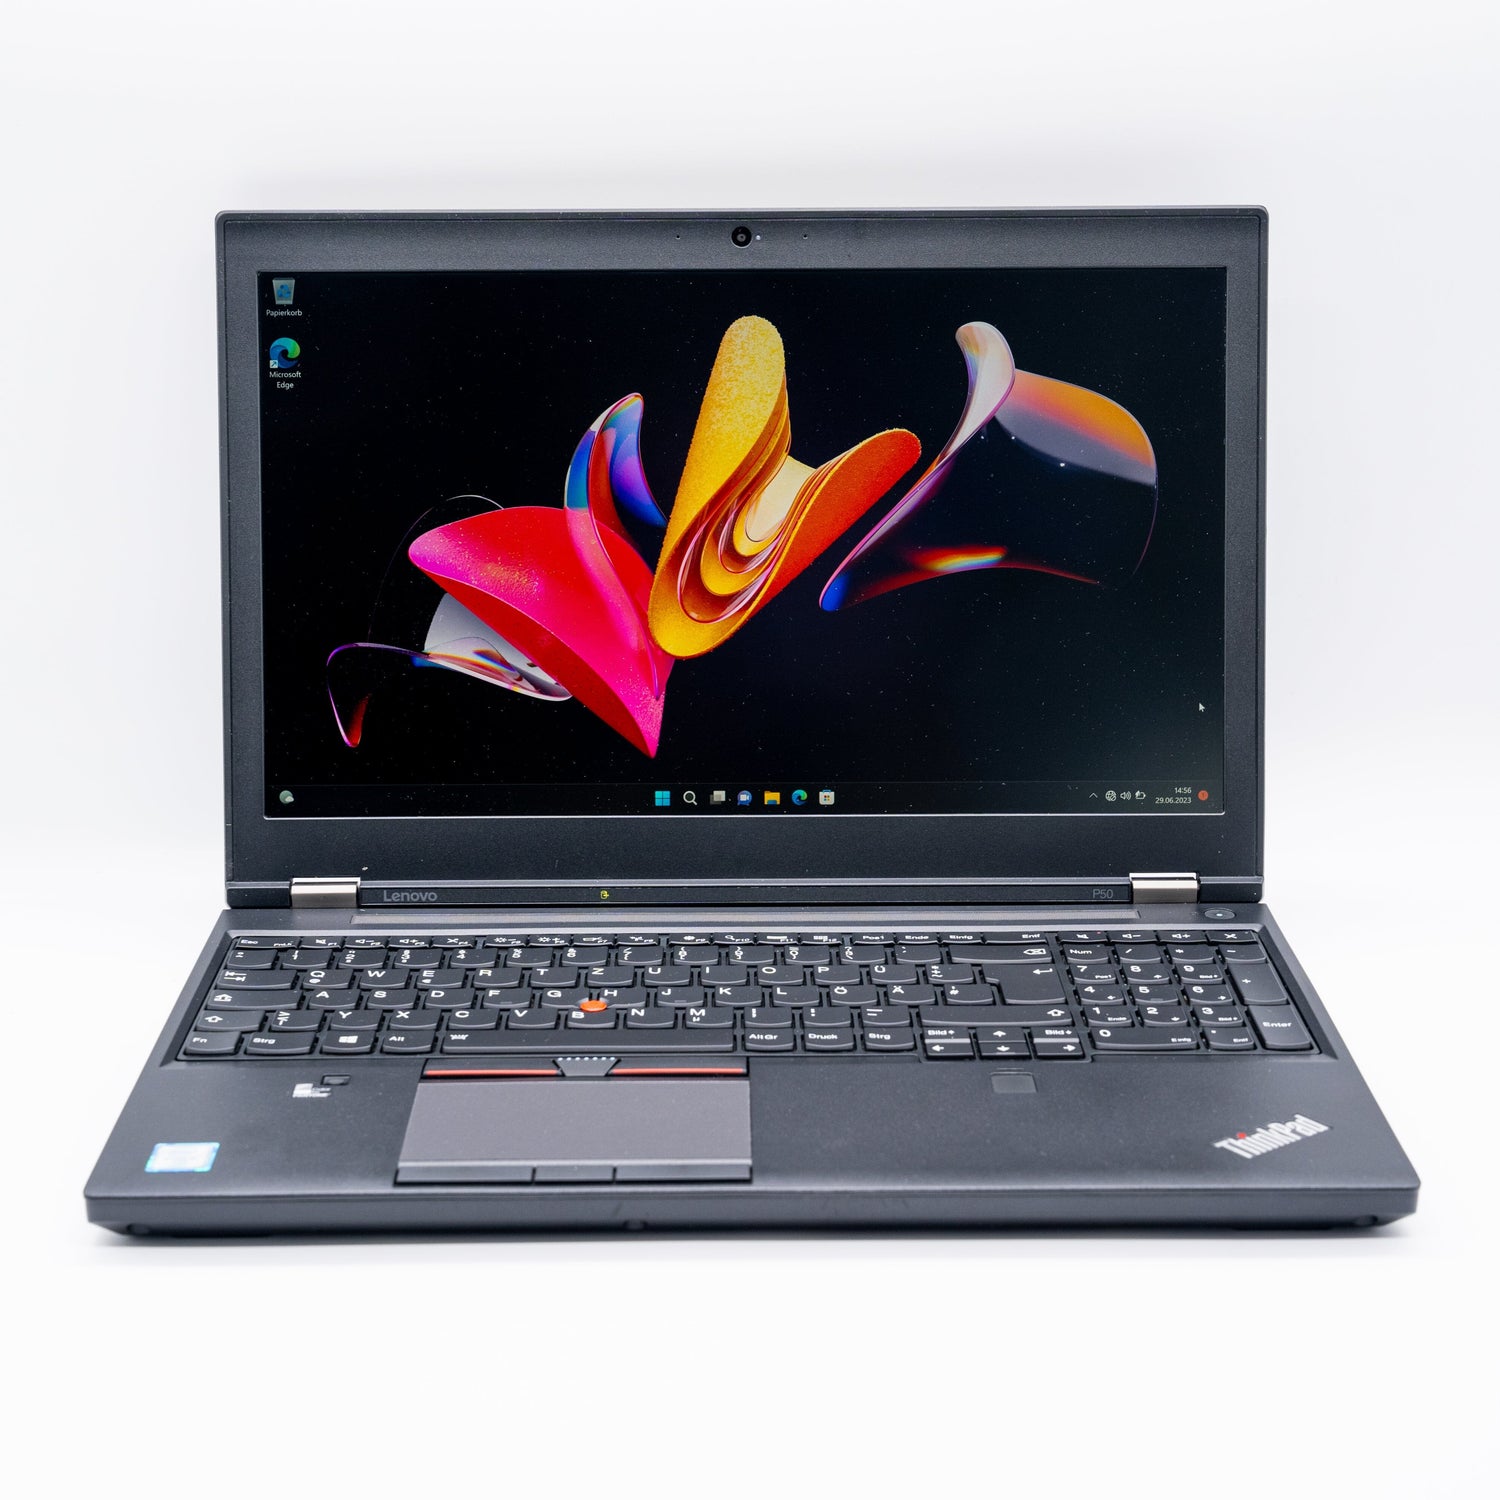 Lenovo ThinkPad P50 i7-6820HQ NVIDIA® QUADRO M2000M 512GB SSD Laptops Notebook-Pro 